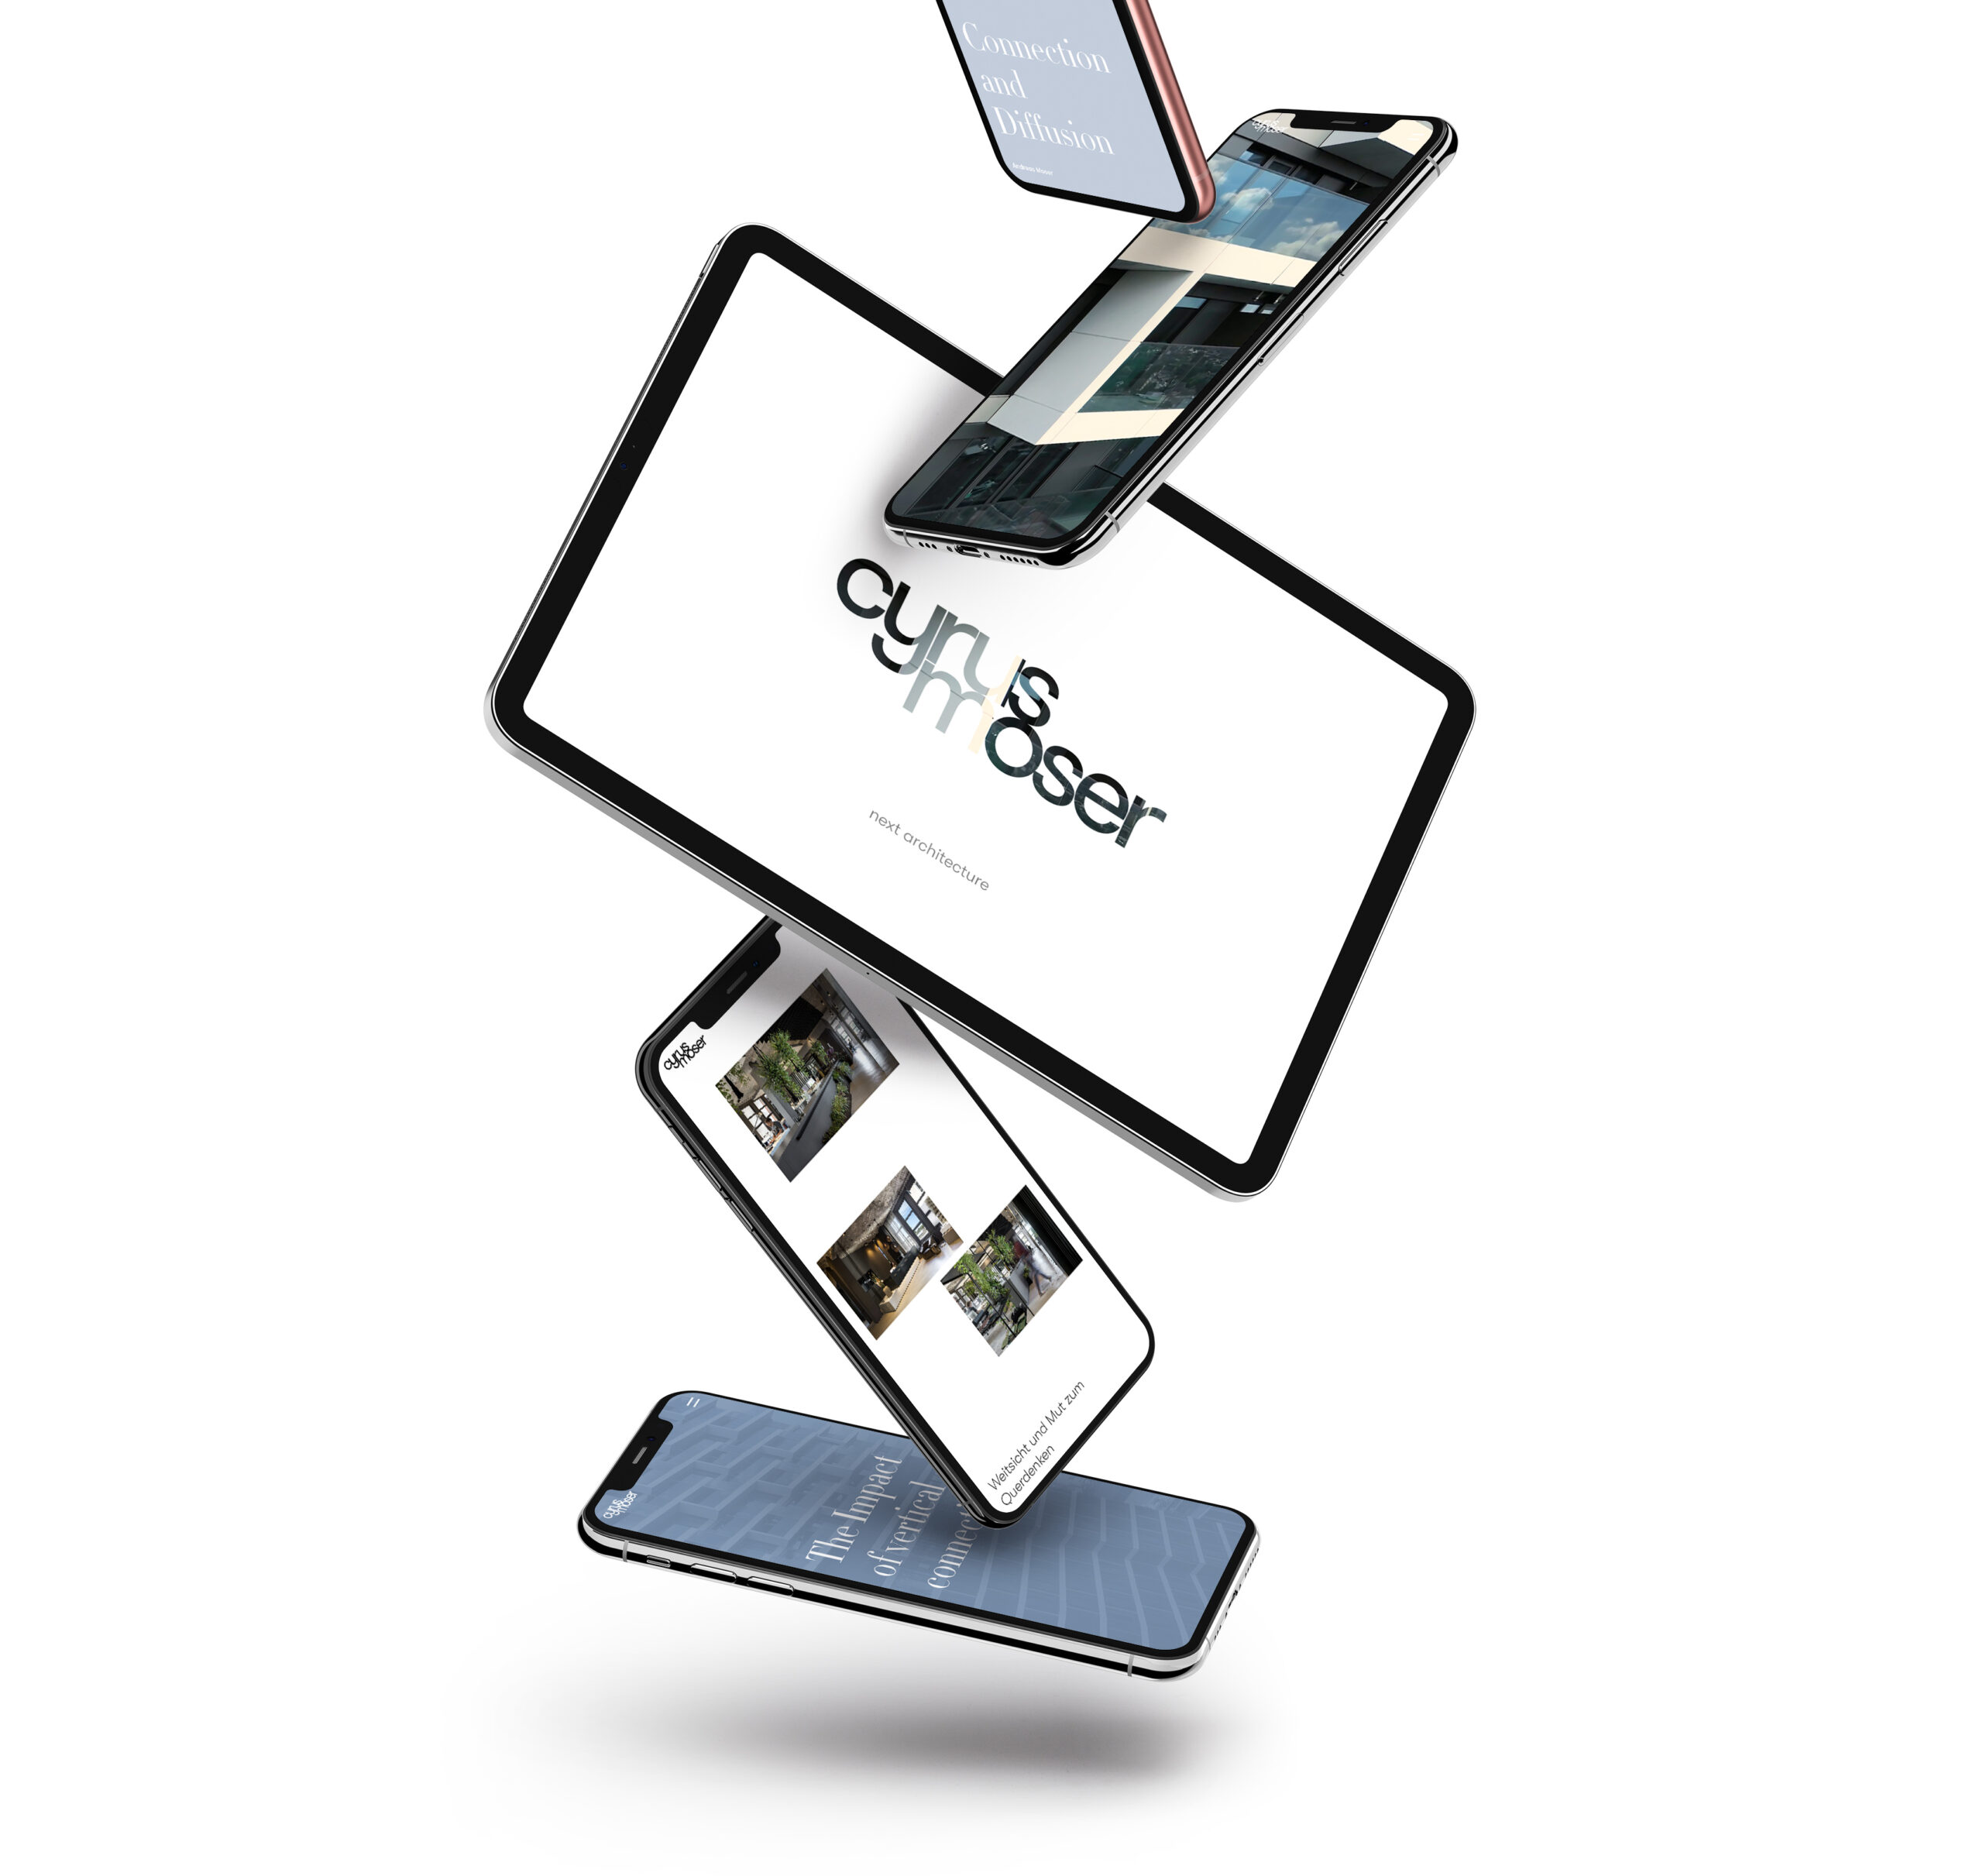 Webdesign Screendesign - IPhone IPad Tablet Smartphone Mobile – cyrus moser Architekten